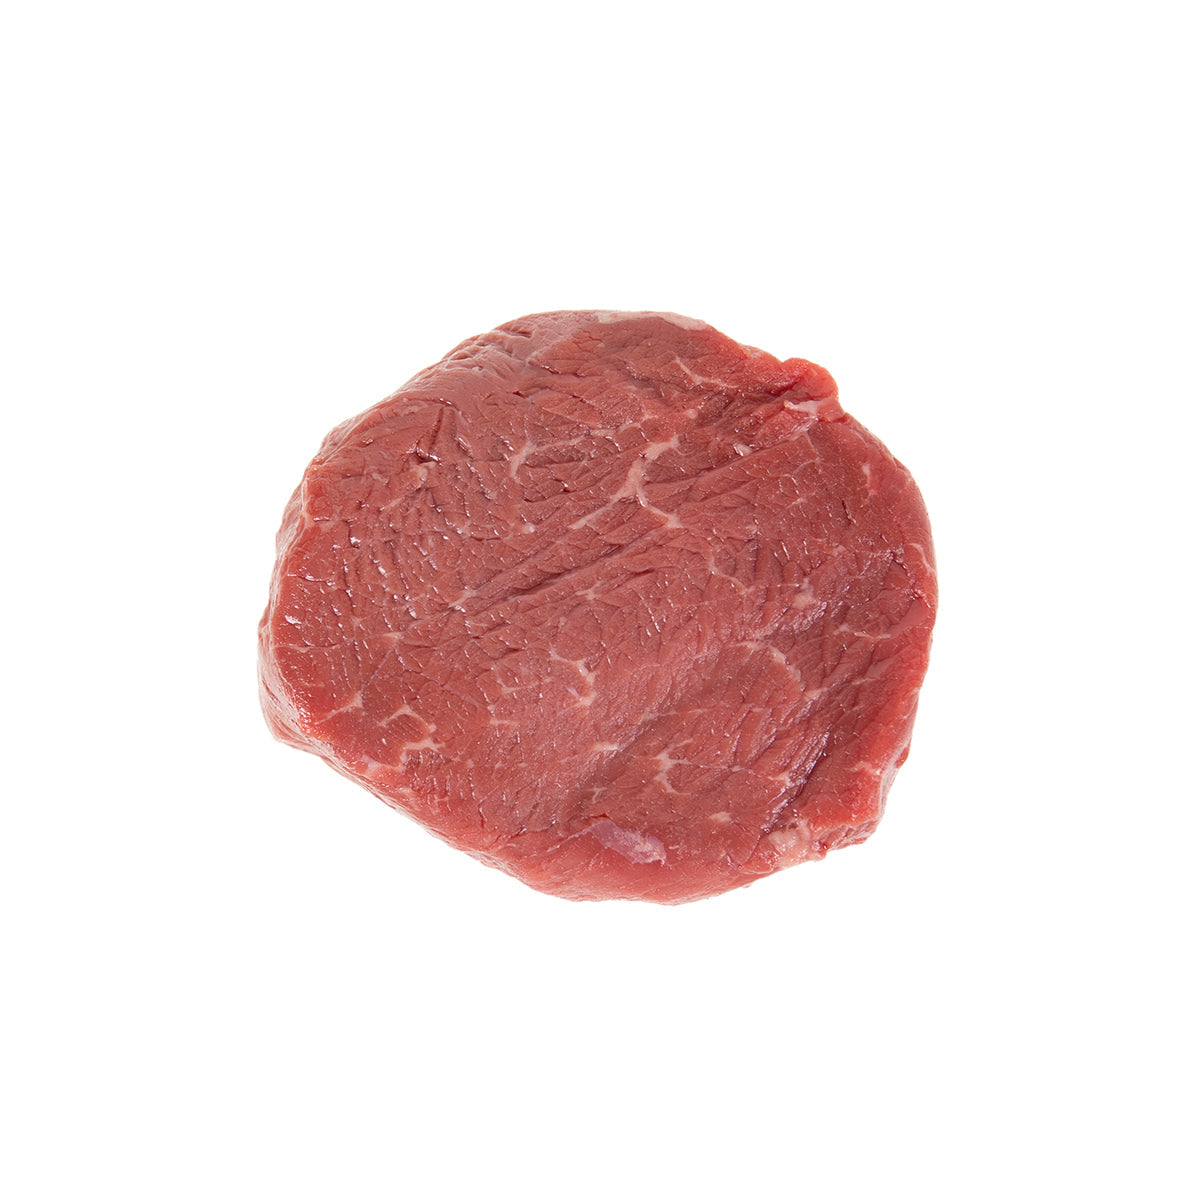 Prime Food Distributor (Pfd) Signature Beef Top Sirloin Butt Steaks 6 OZ